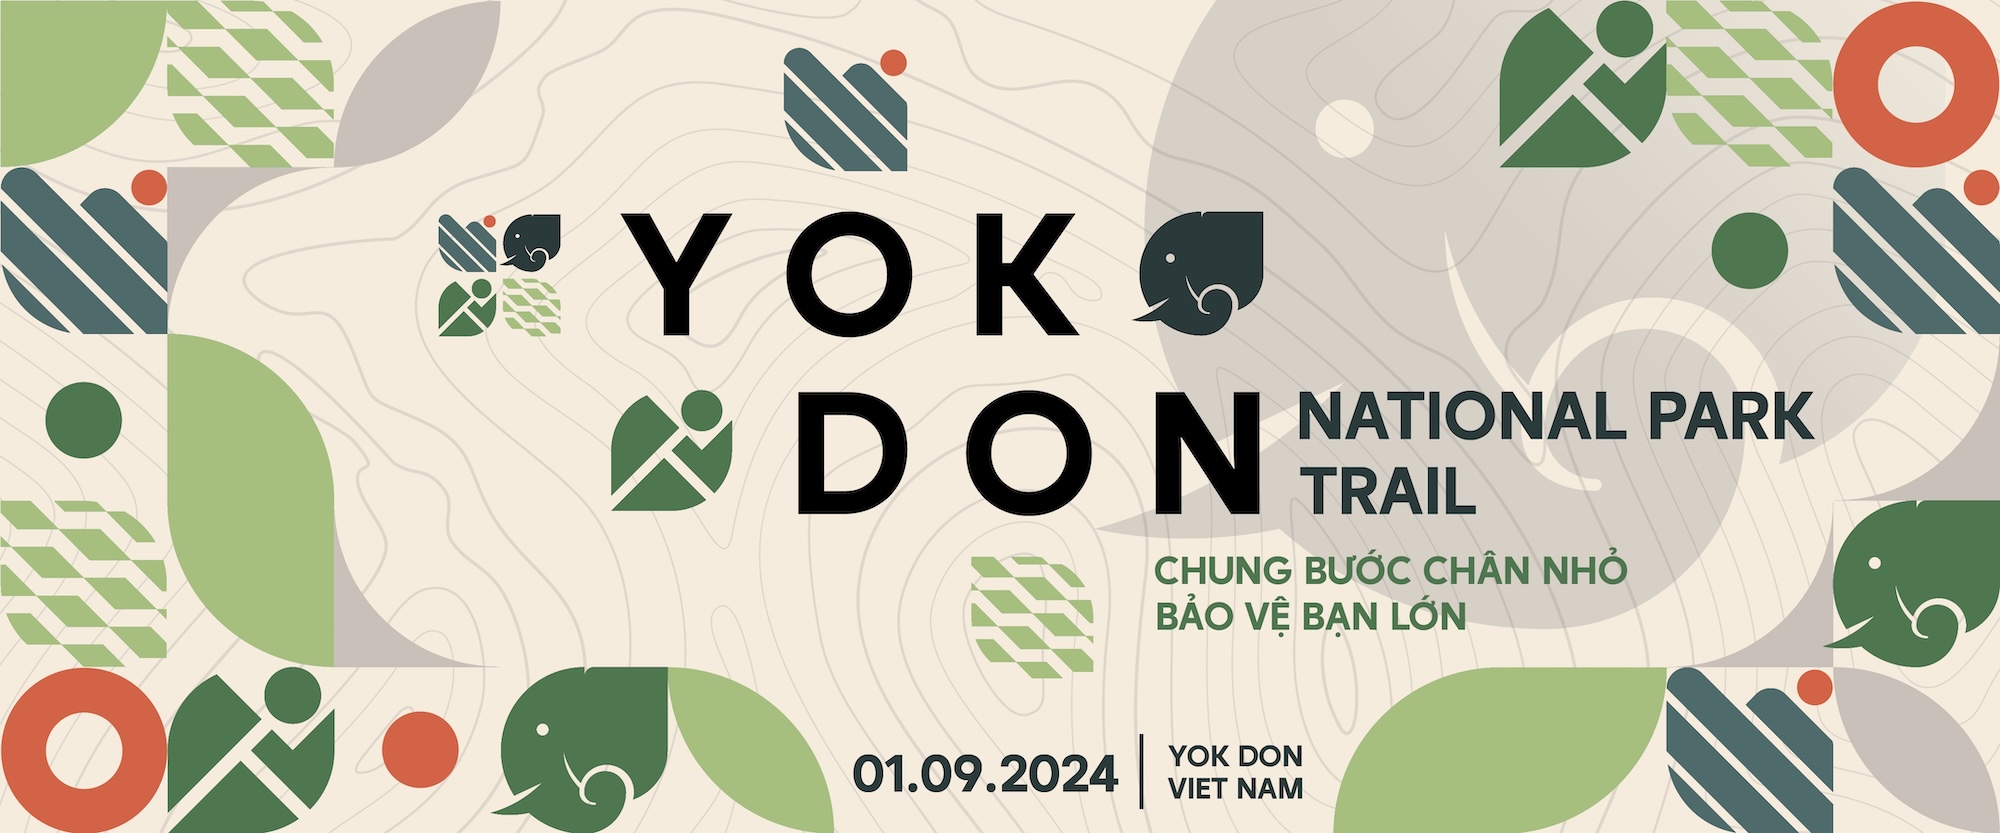 Yok Don National Park Trail 2024